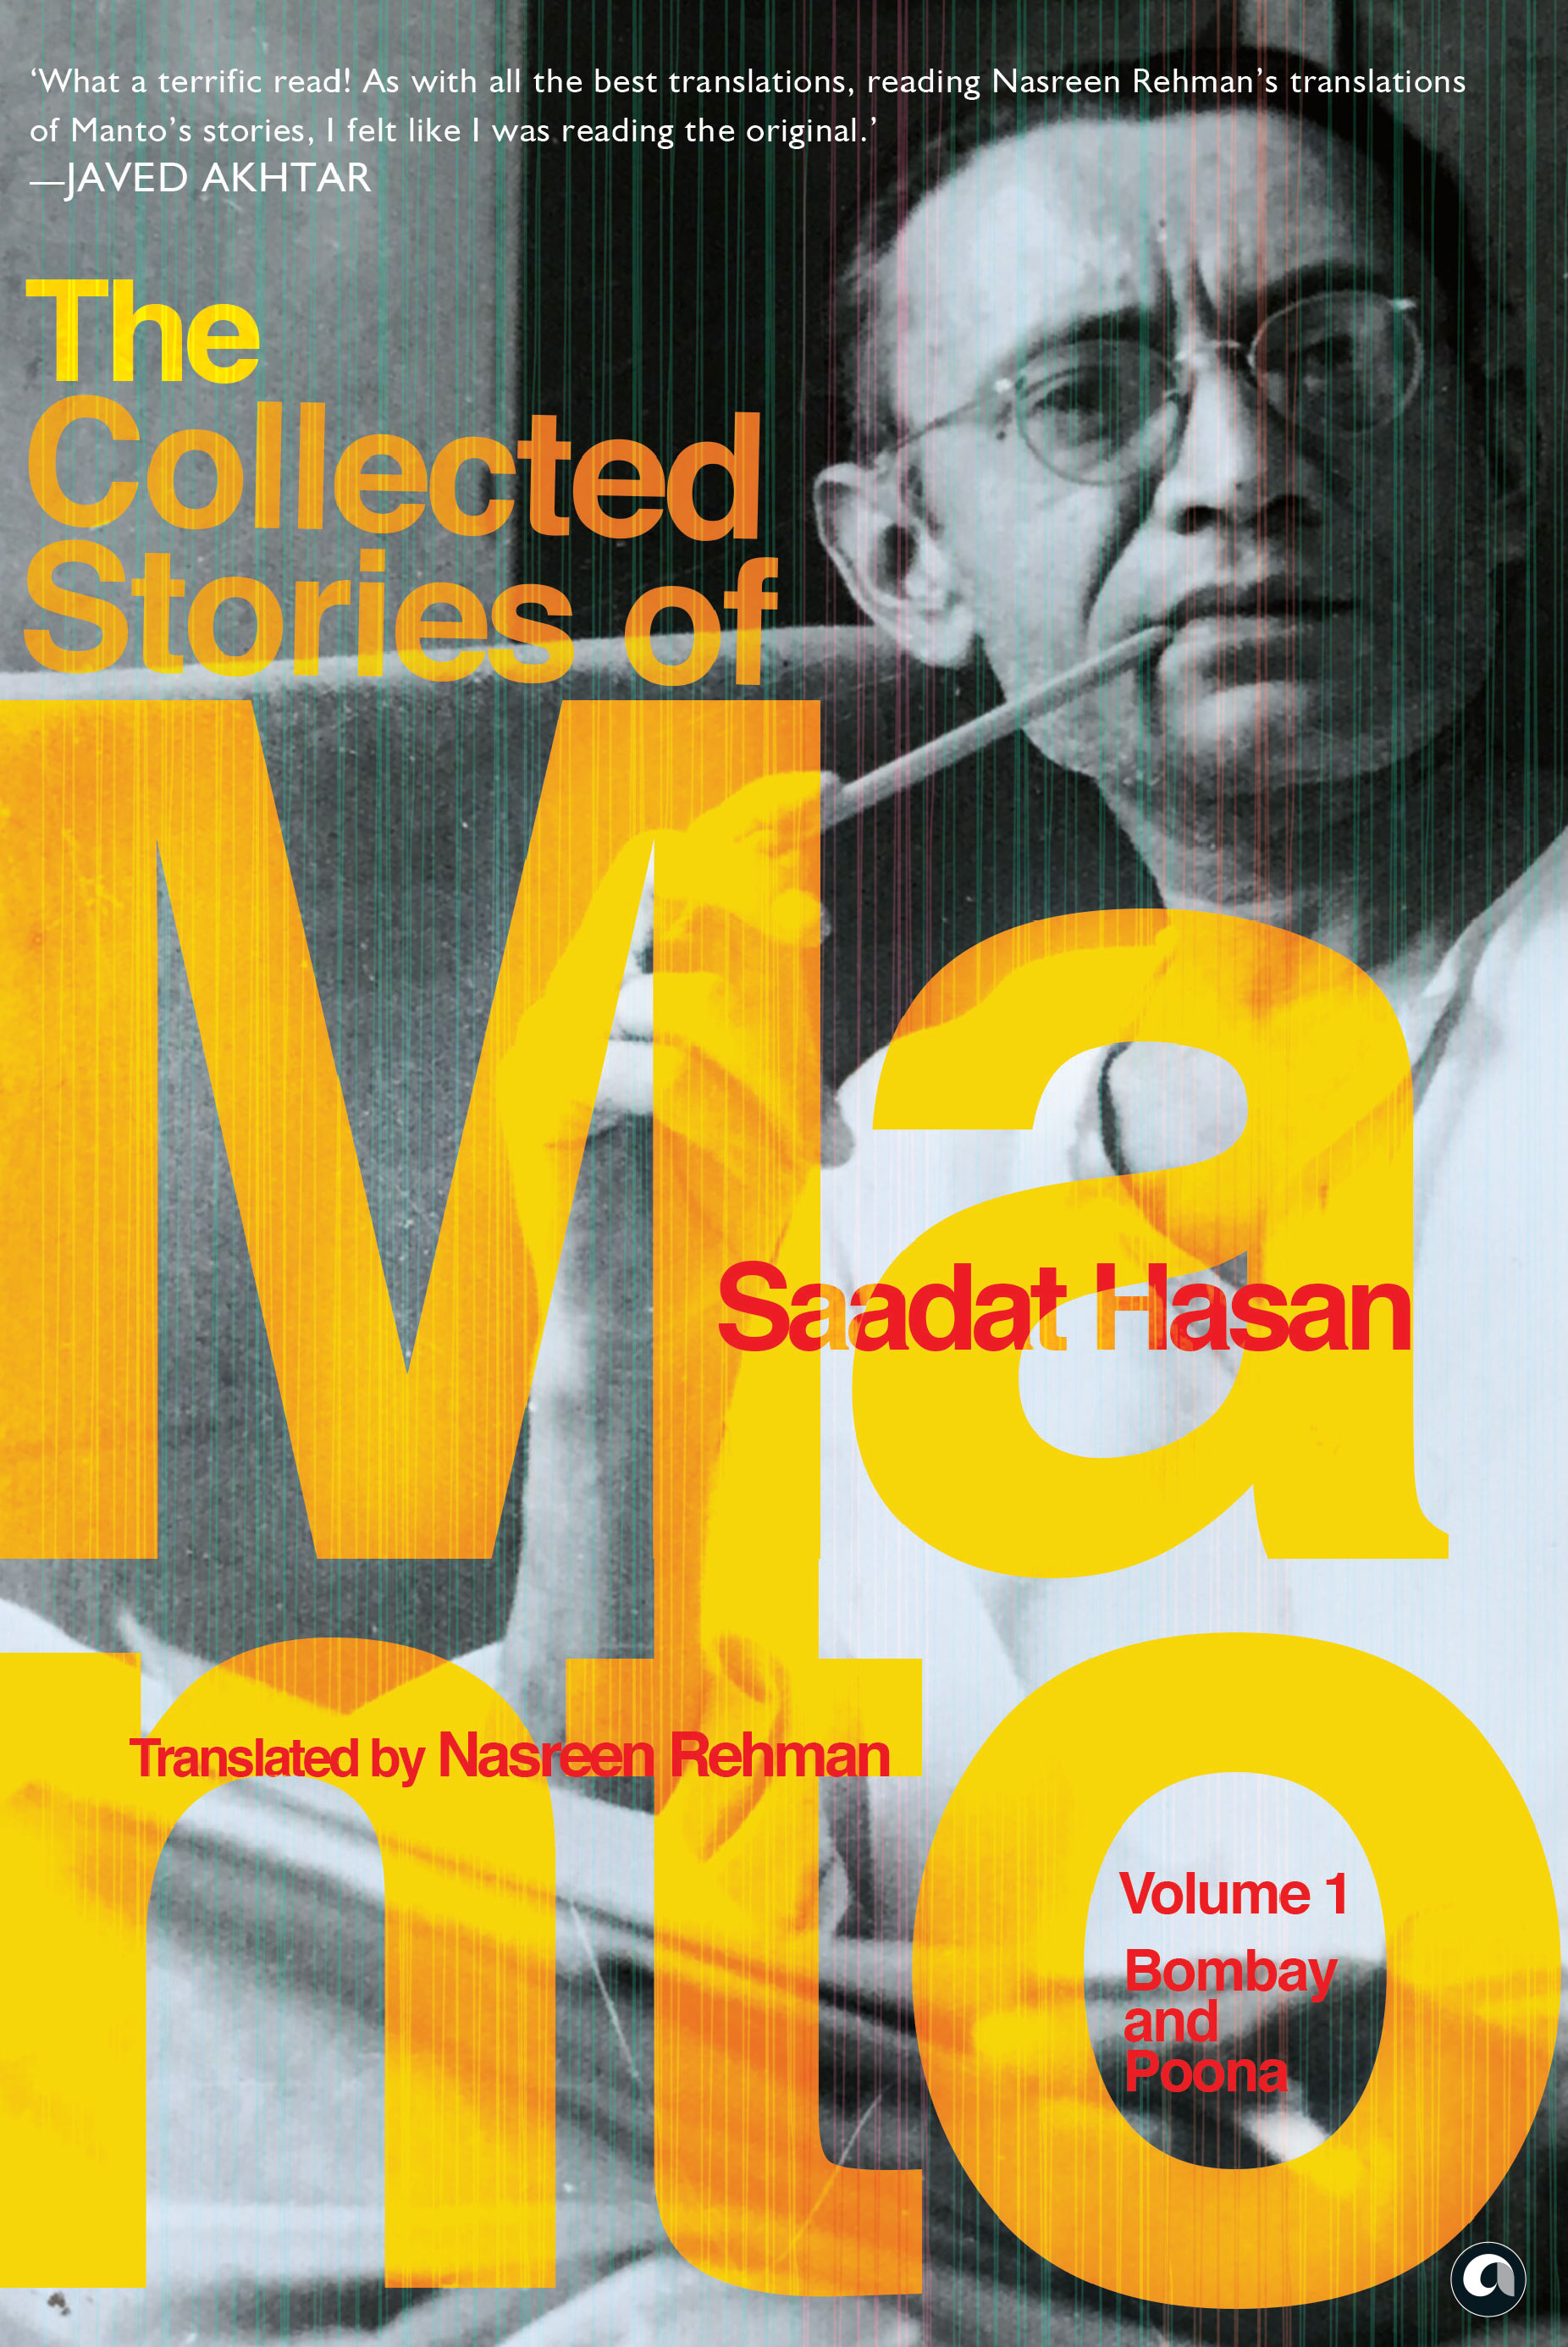 The Collected Stories of Saadat Hasan Manto: Volume 1: Bombay and Poona